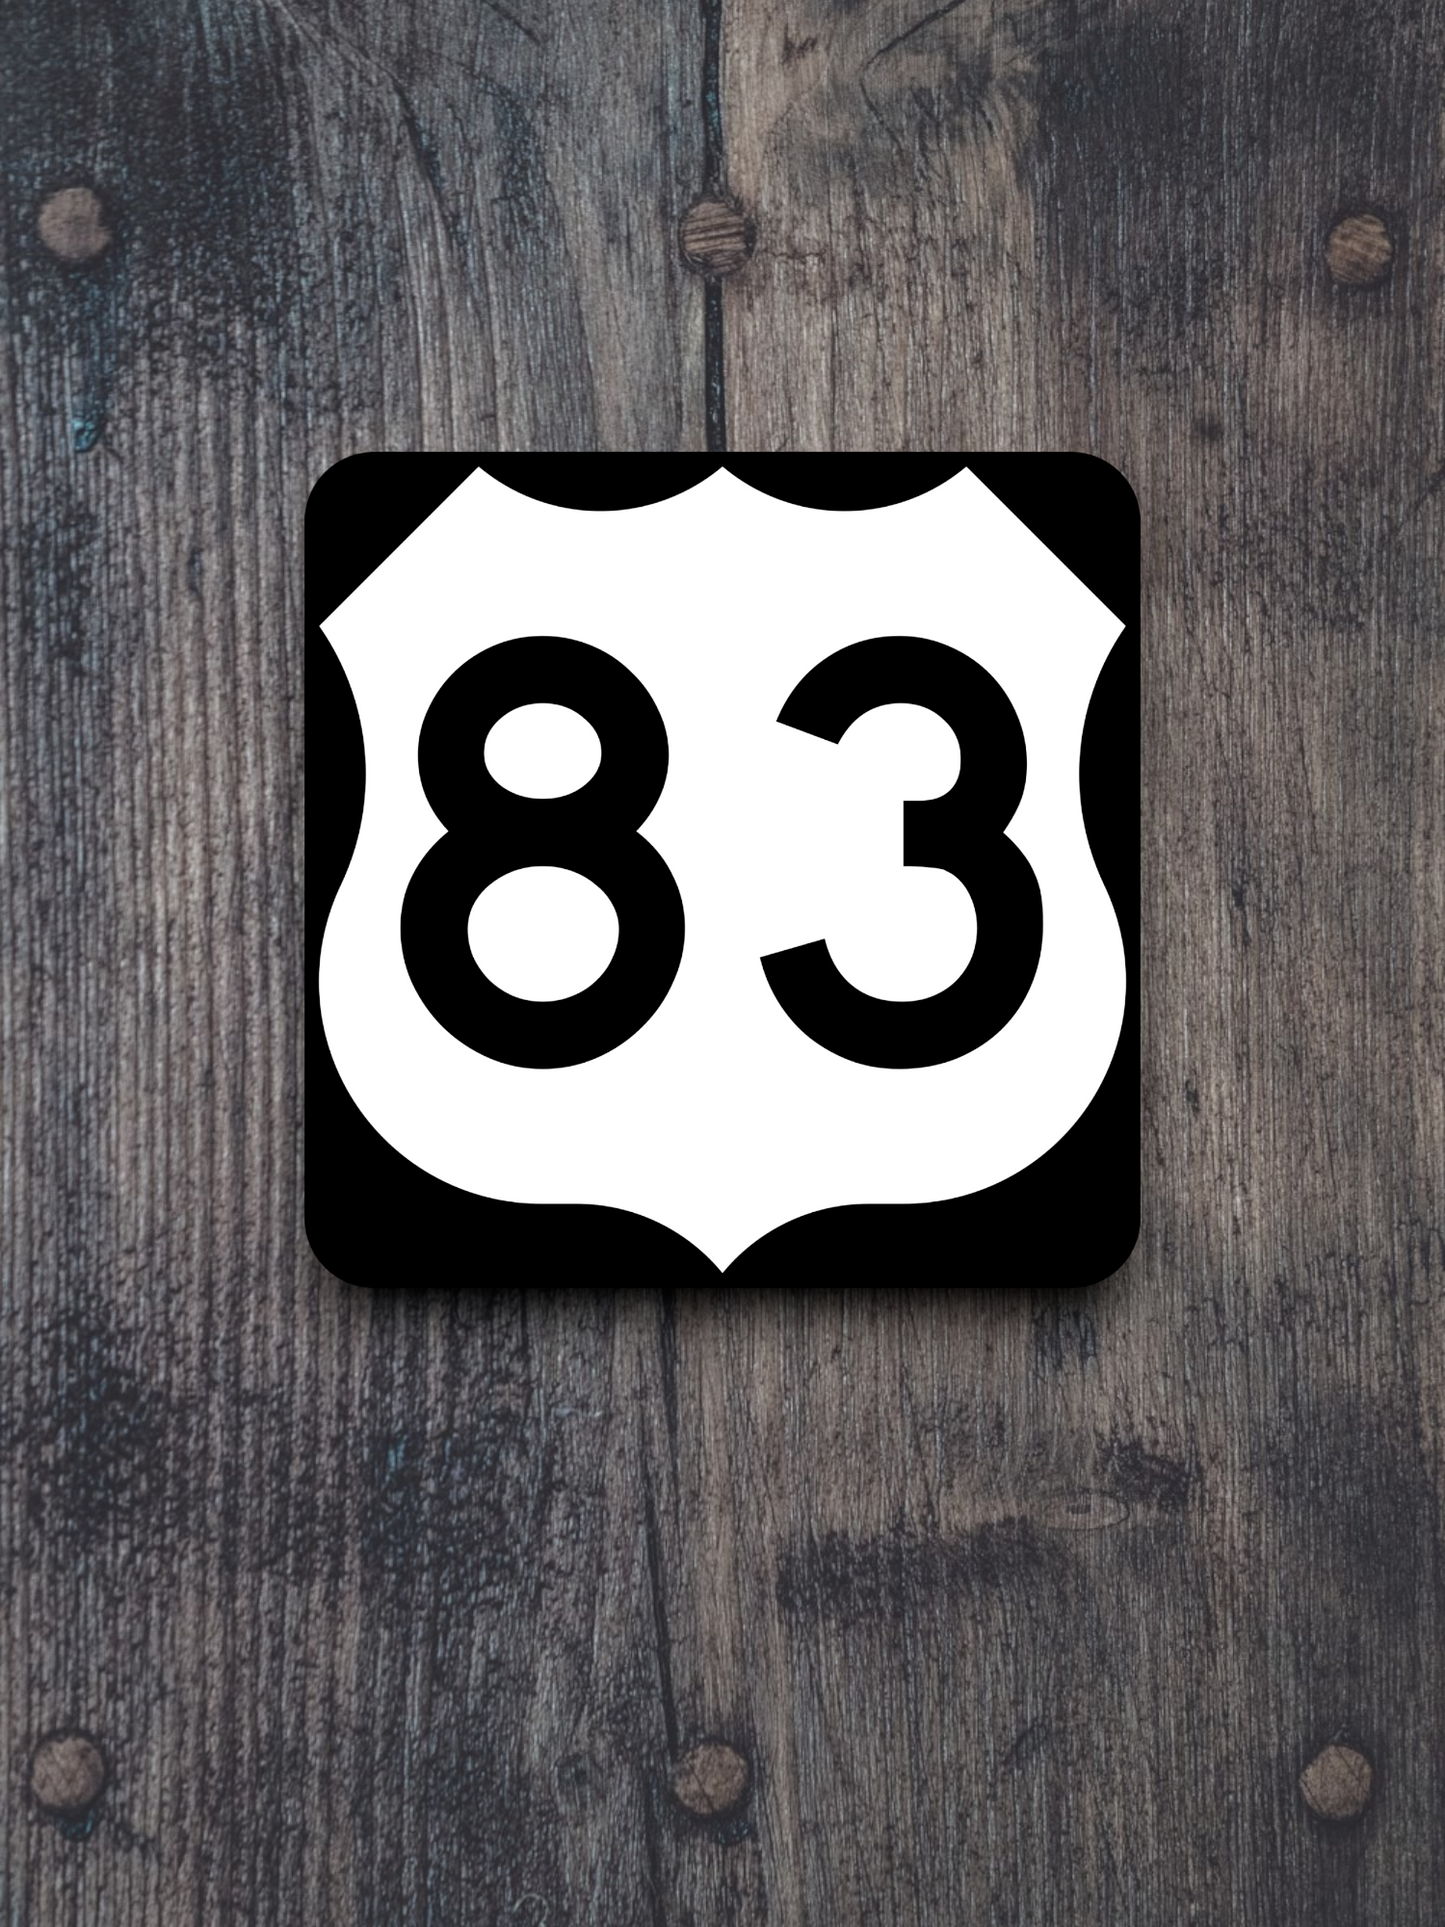 U.S. Route 83 Road Sign Sticker